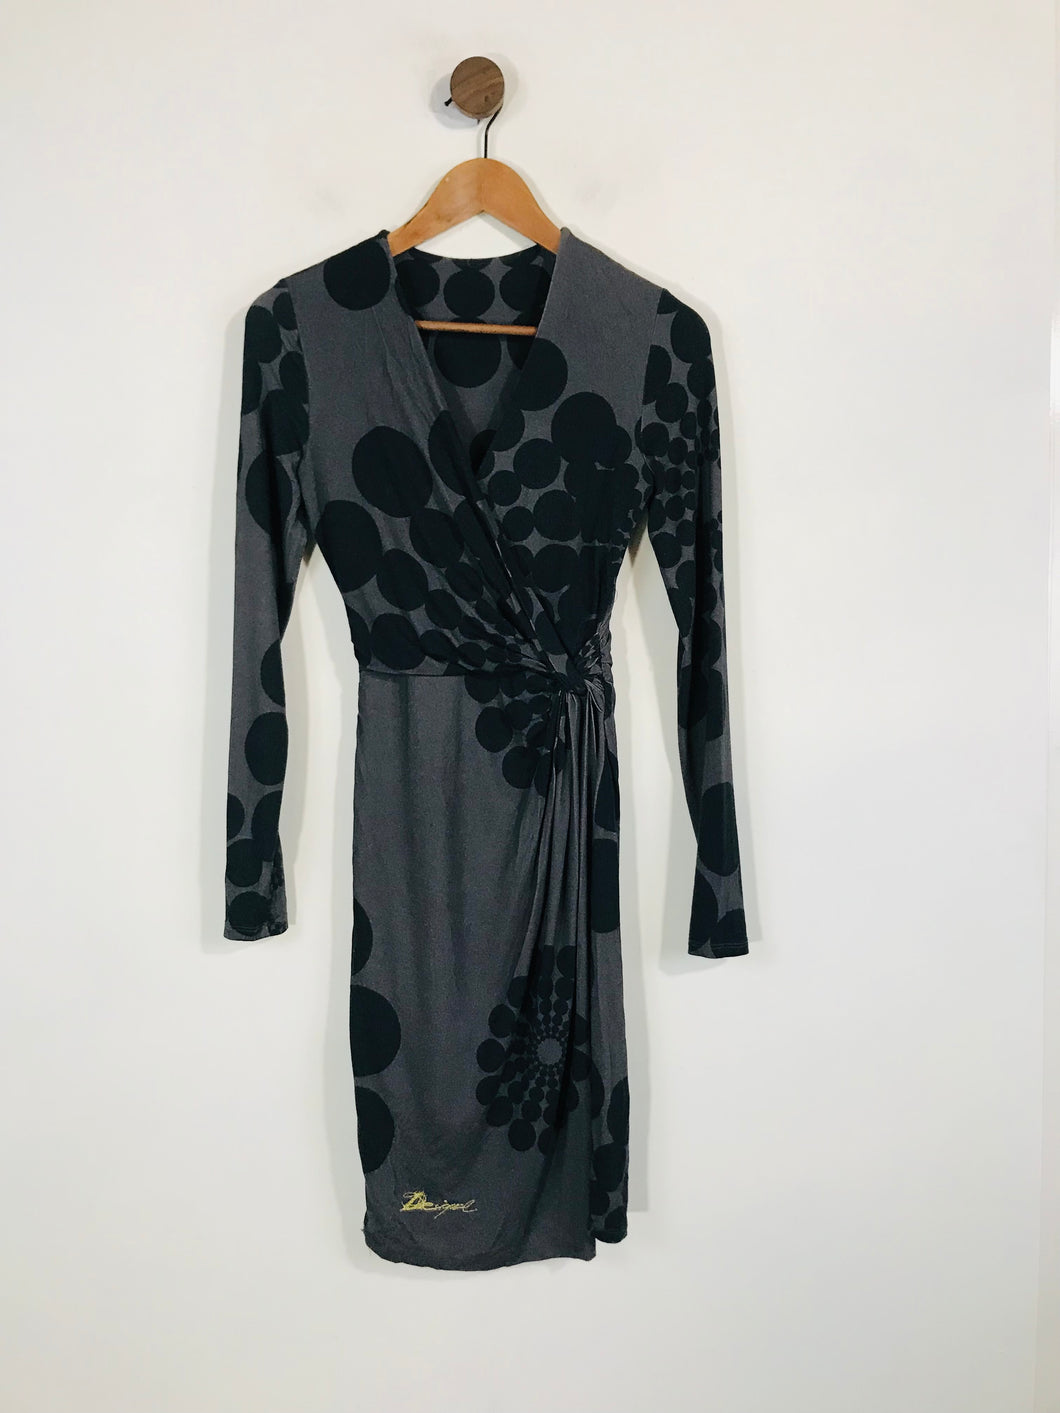 Desigual Women's Polka Dot Ruched Bodycon Dress | XS UK6-8 | Grey